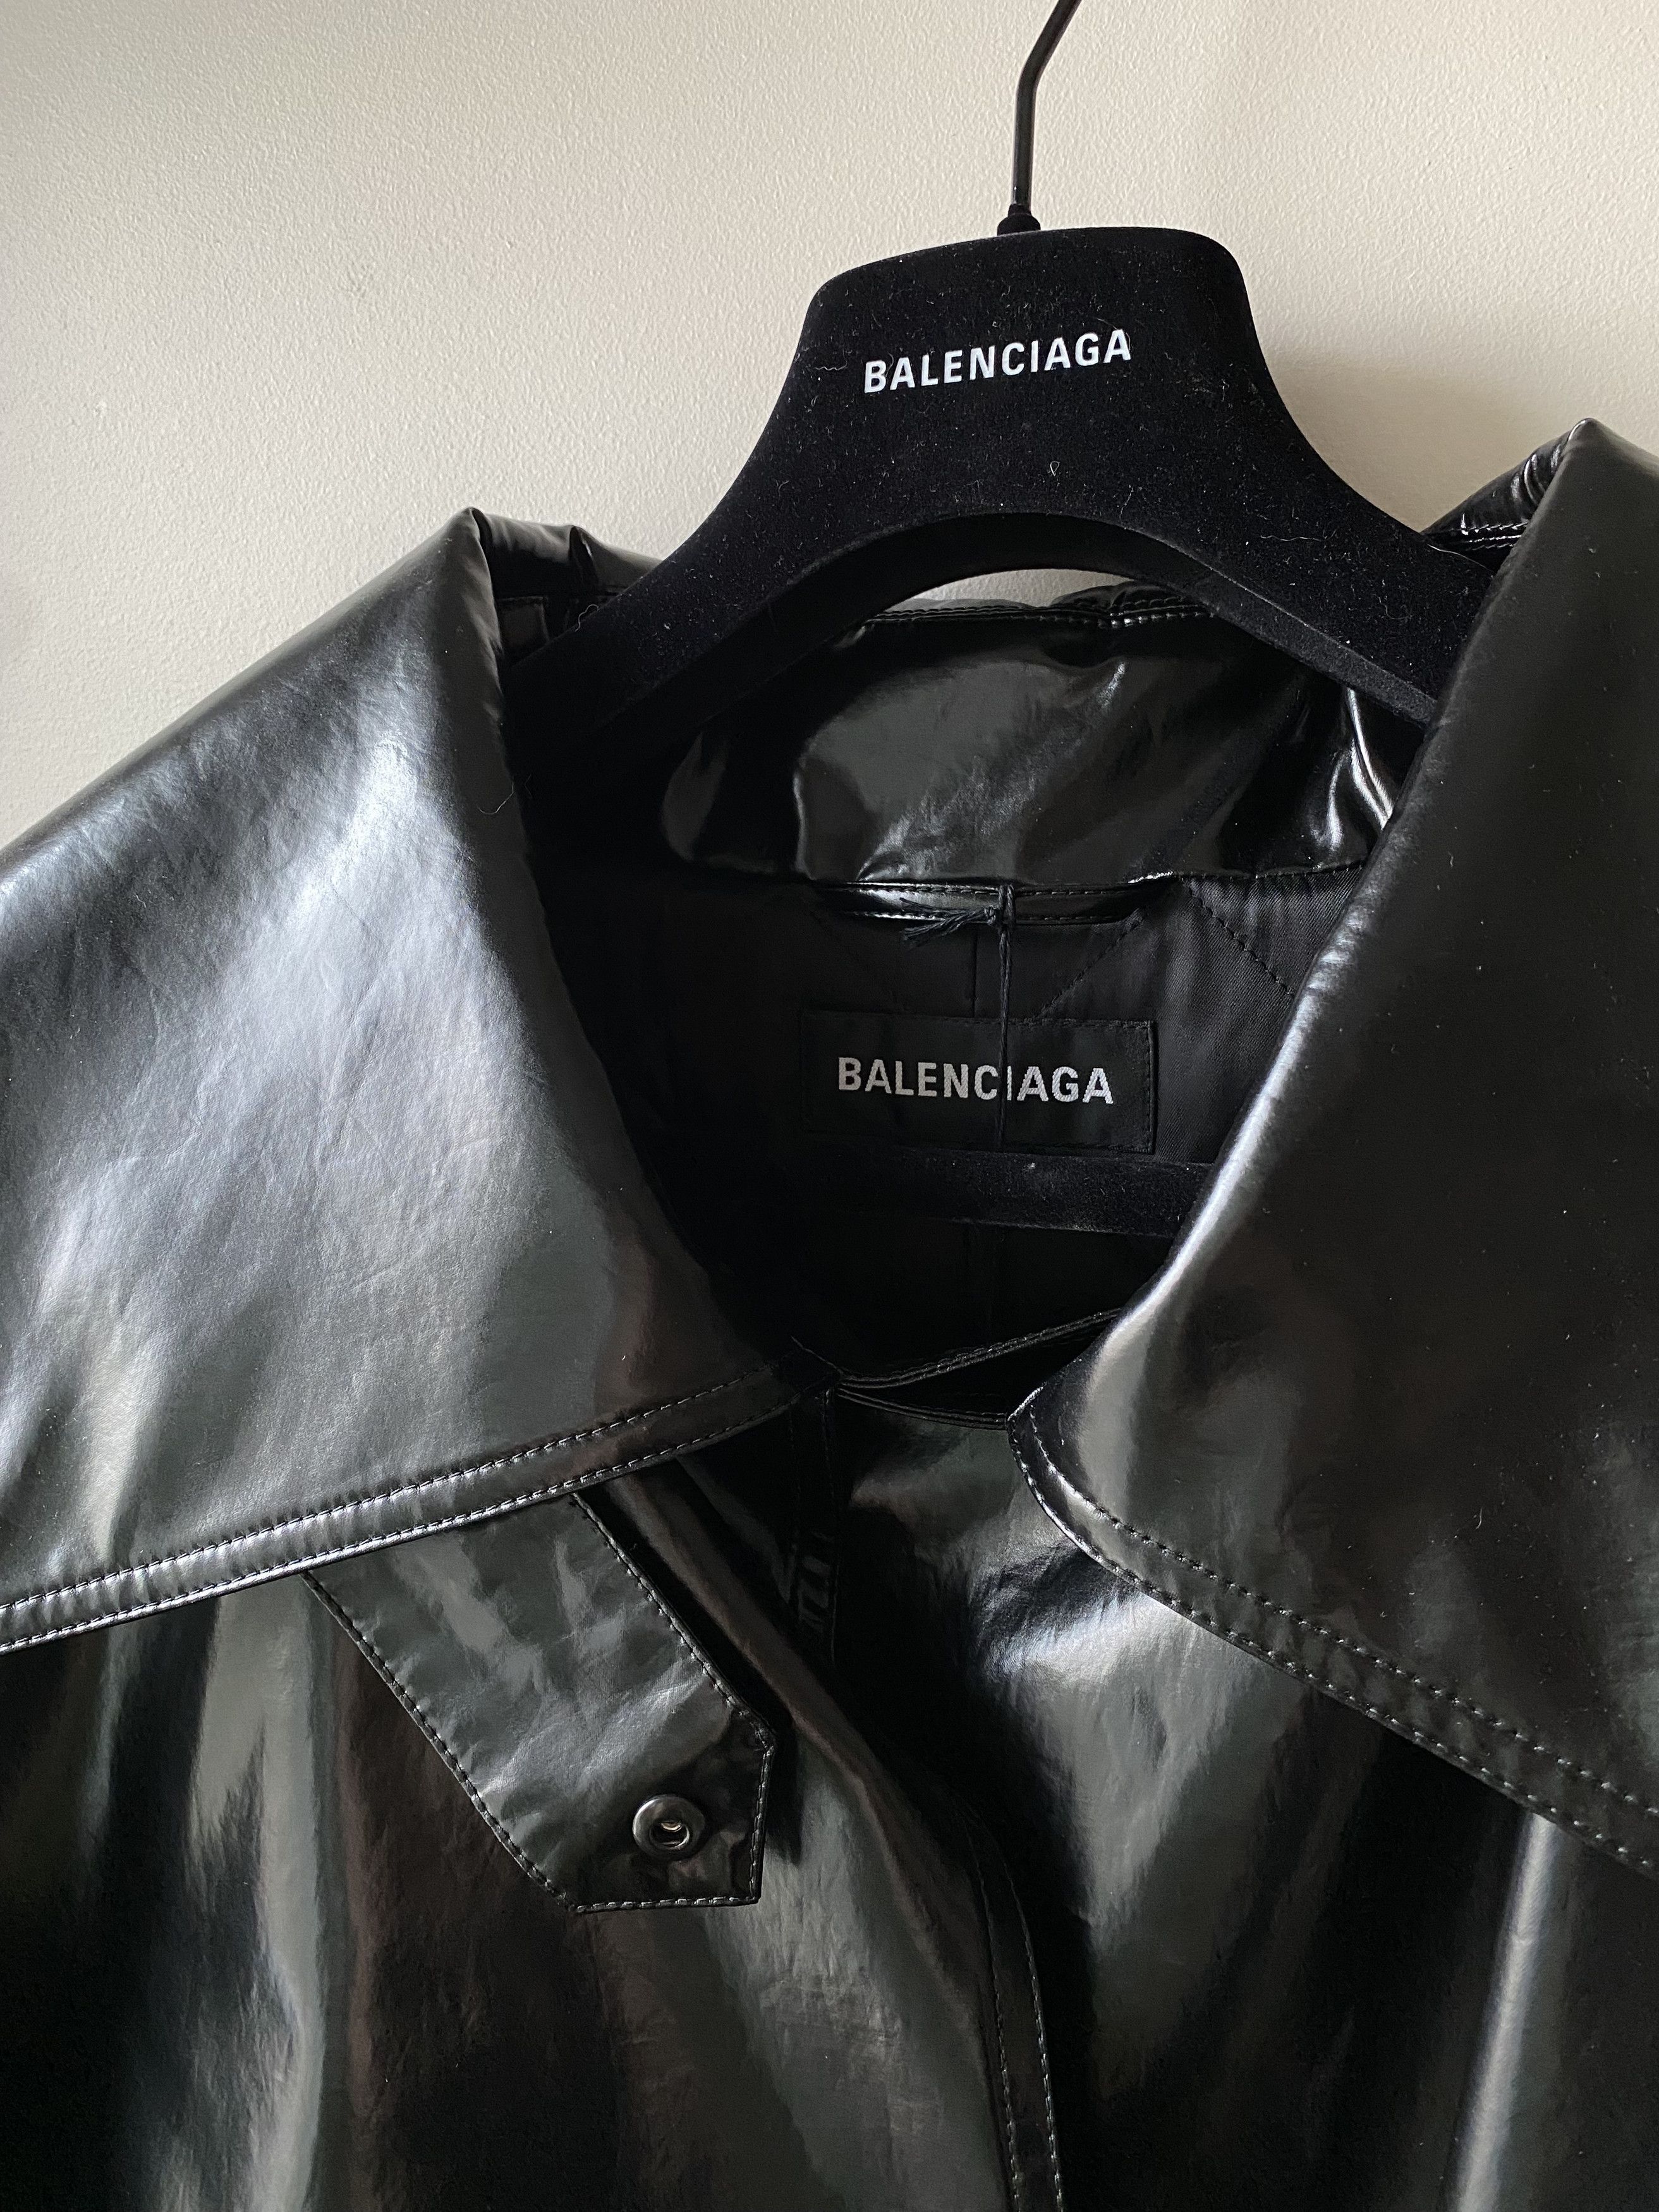 Balenciaga *FINAL DROP* Incognito Trench Coat Size US S / EU 44-46 / 1 - 4 Thumbnail